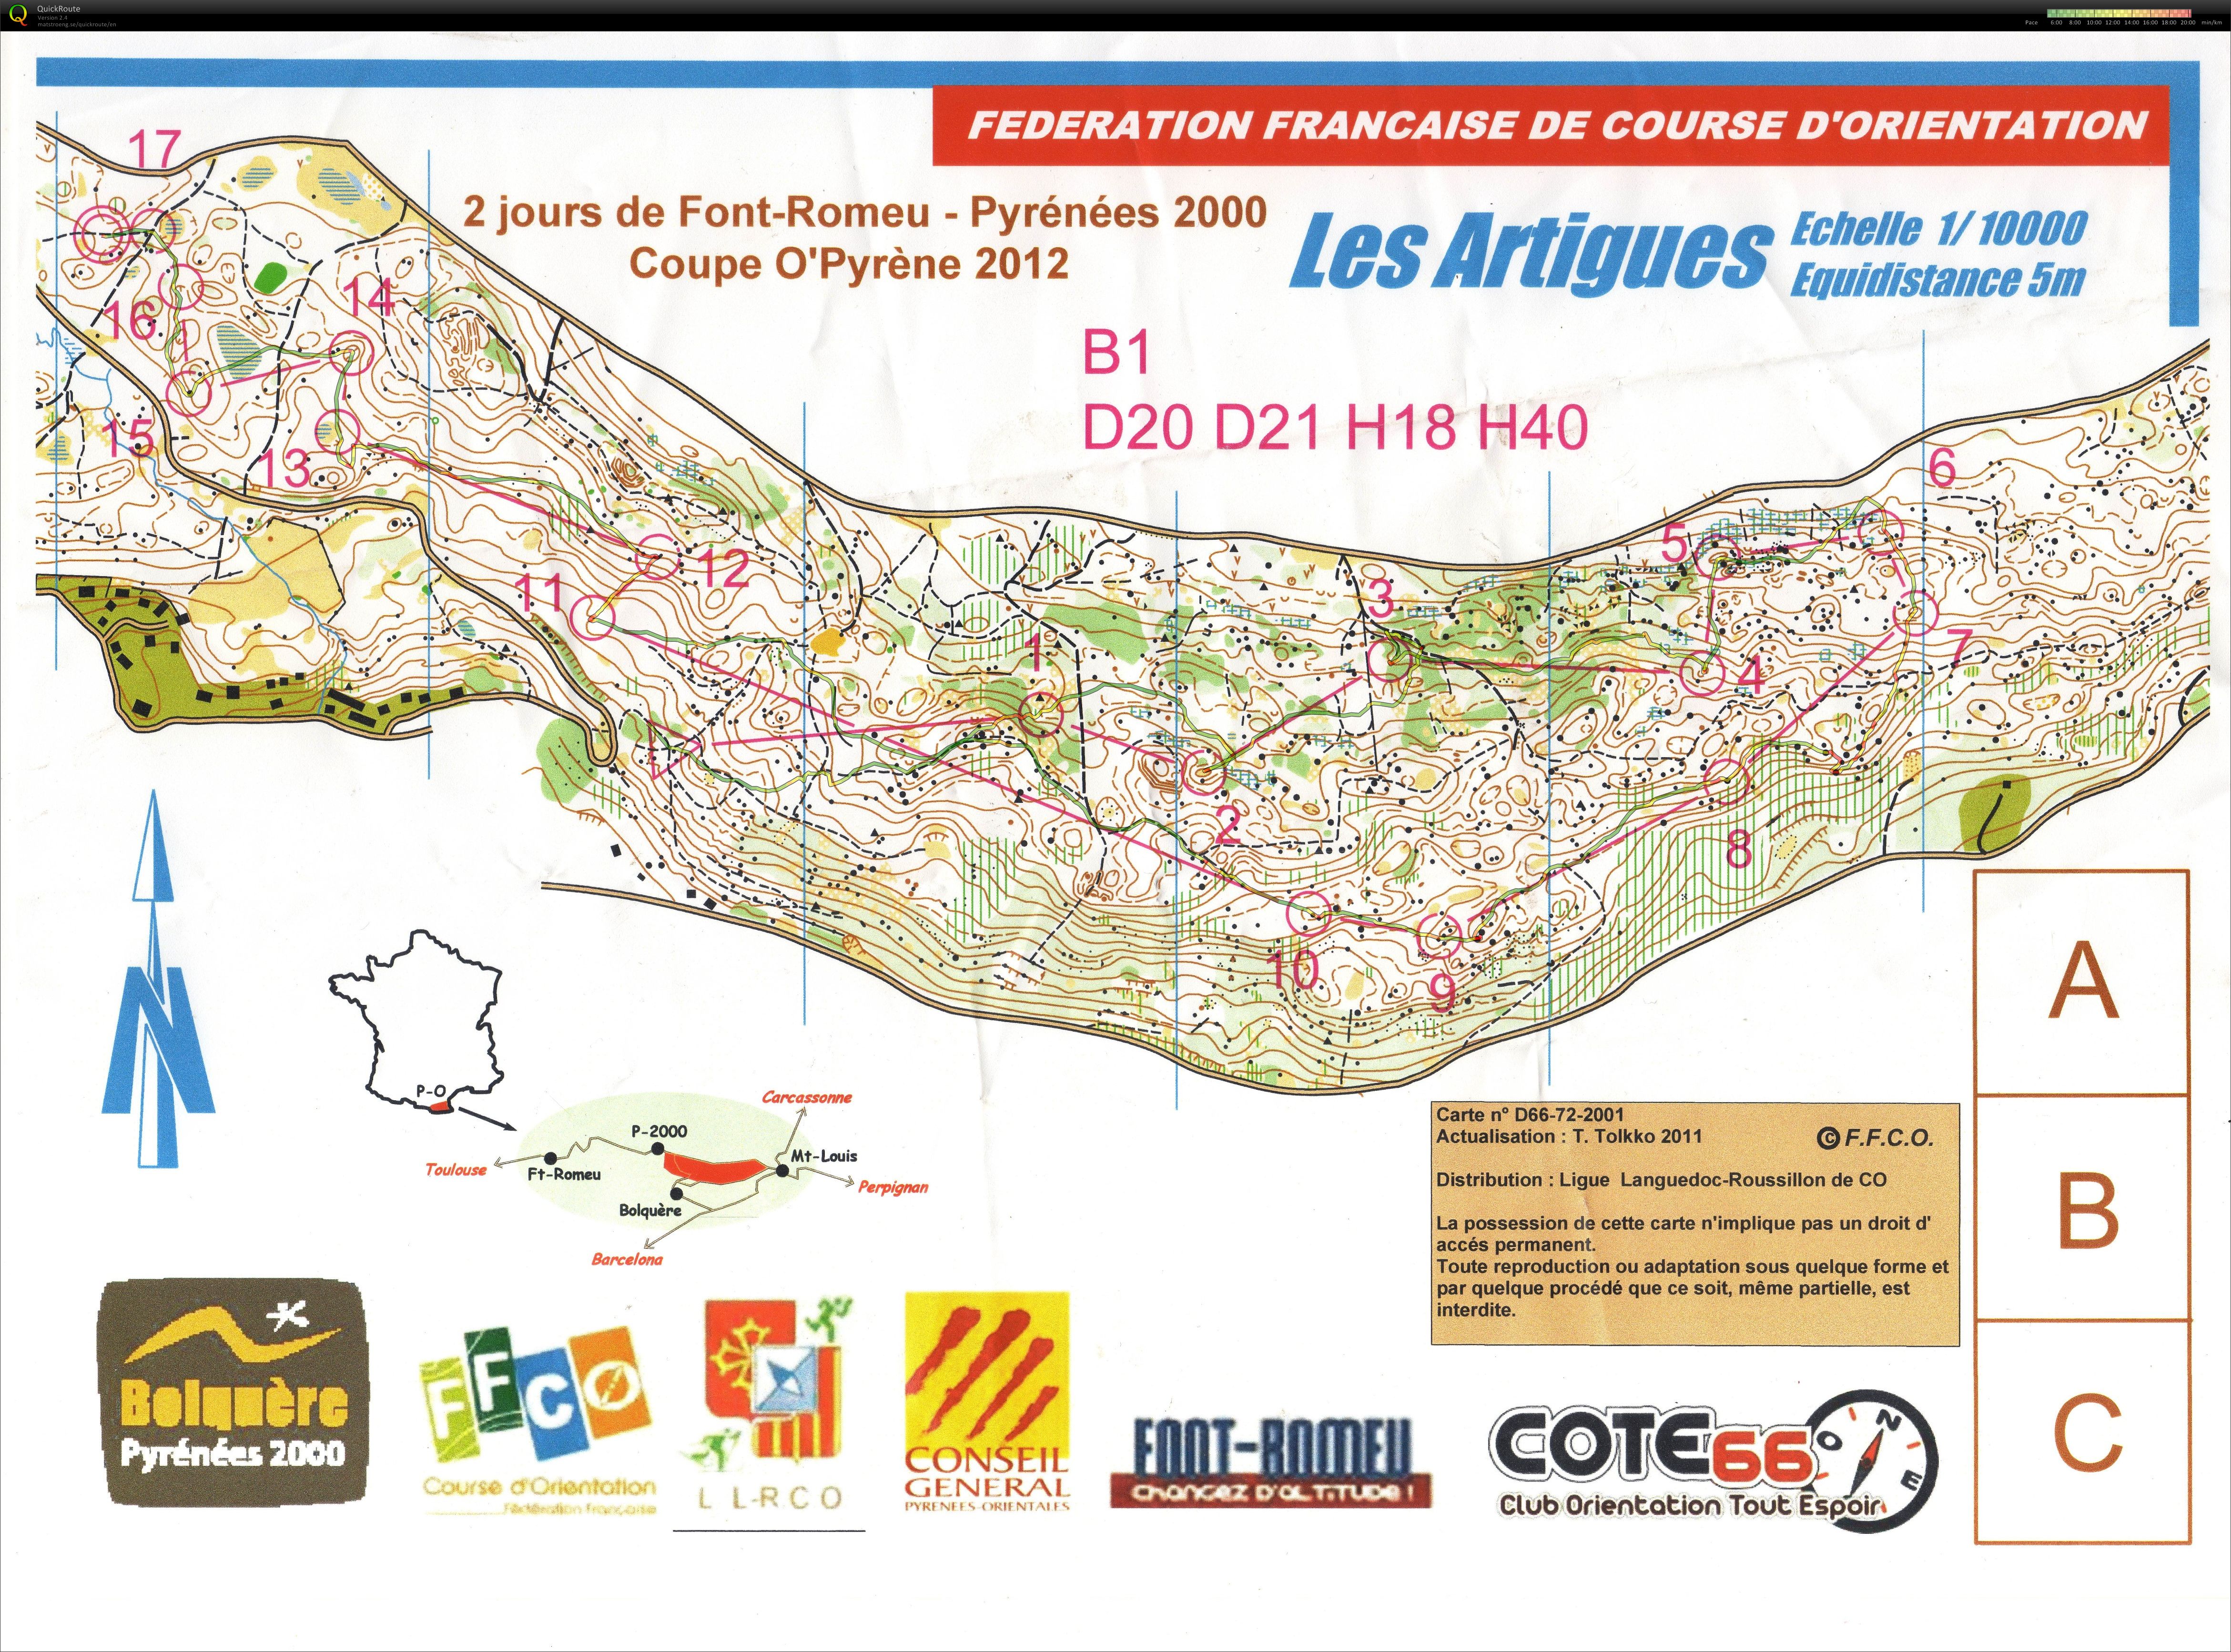 O'Pyrene 2 jours de Font Romeu - Pyrénées 2000 (02/09/2012)